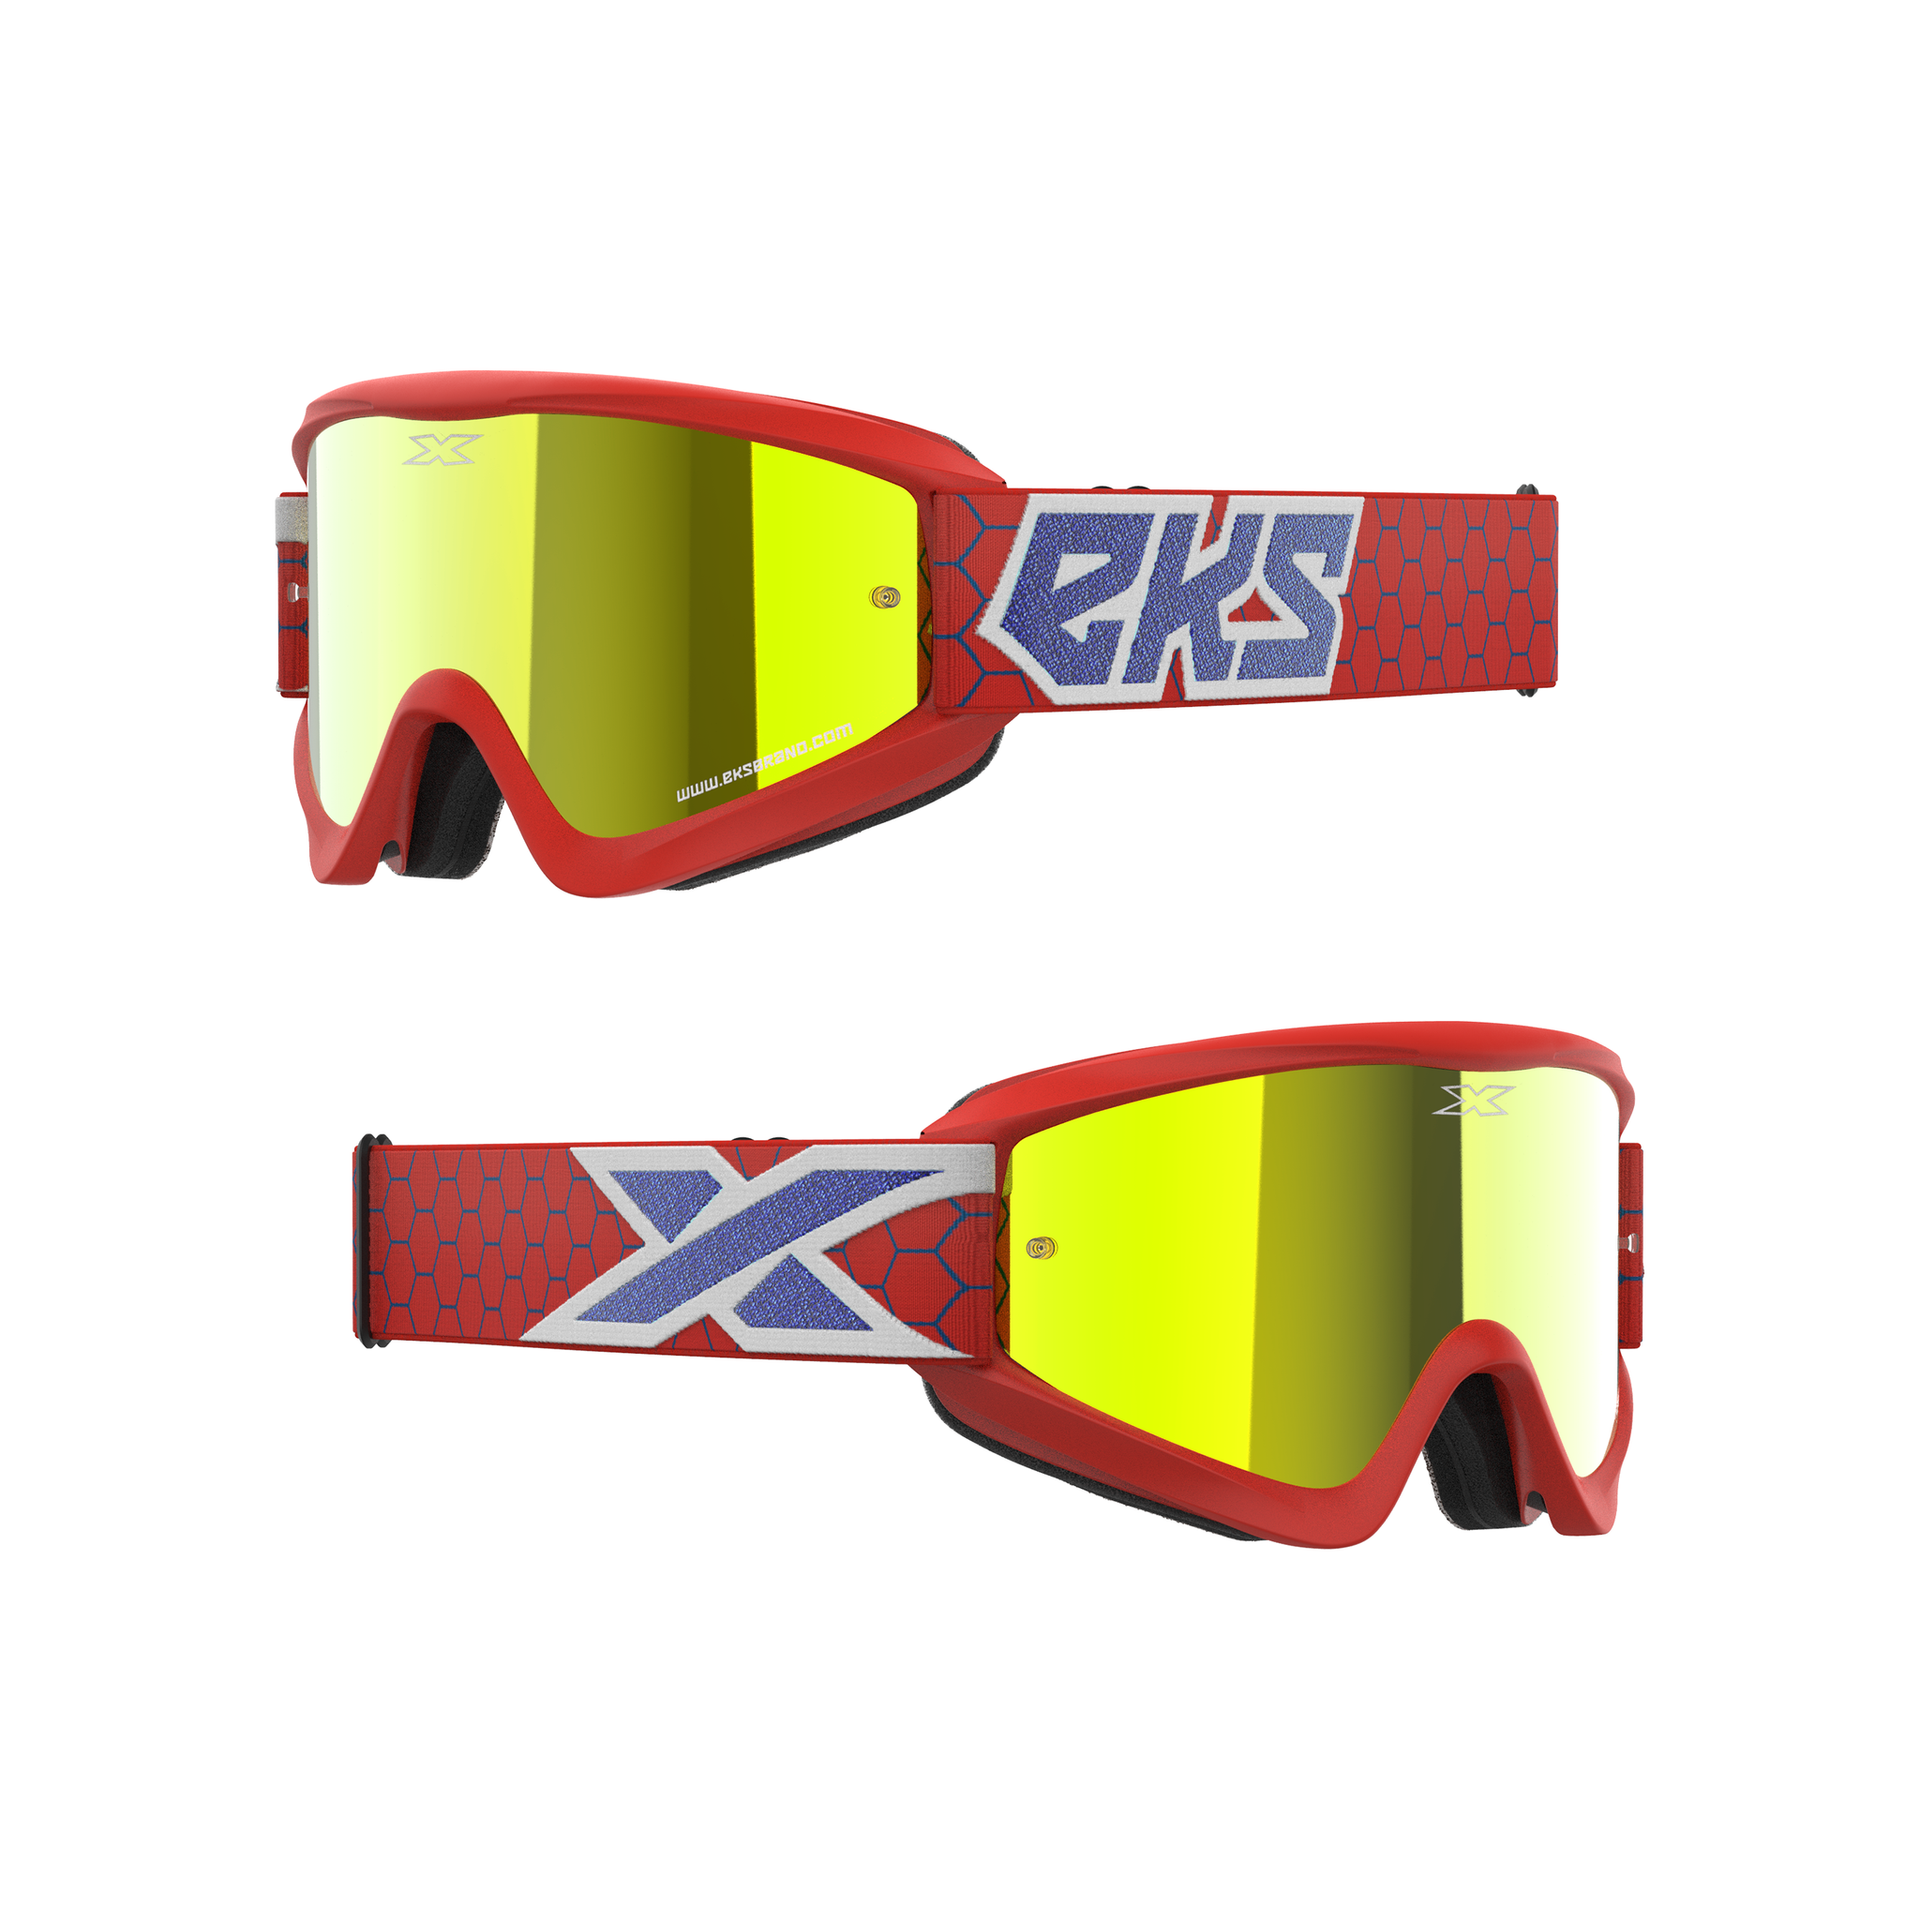 EKS - Gox Flat-Out Mirror Goggles